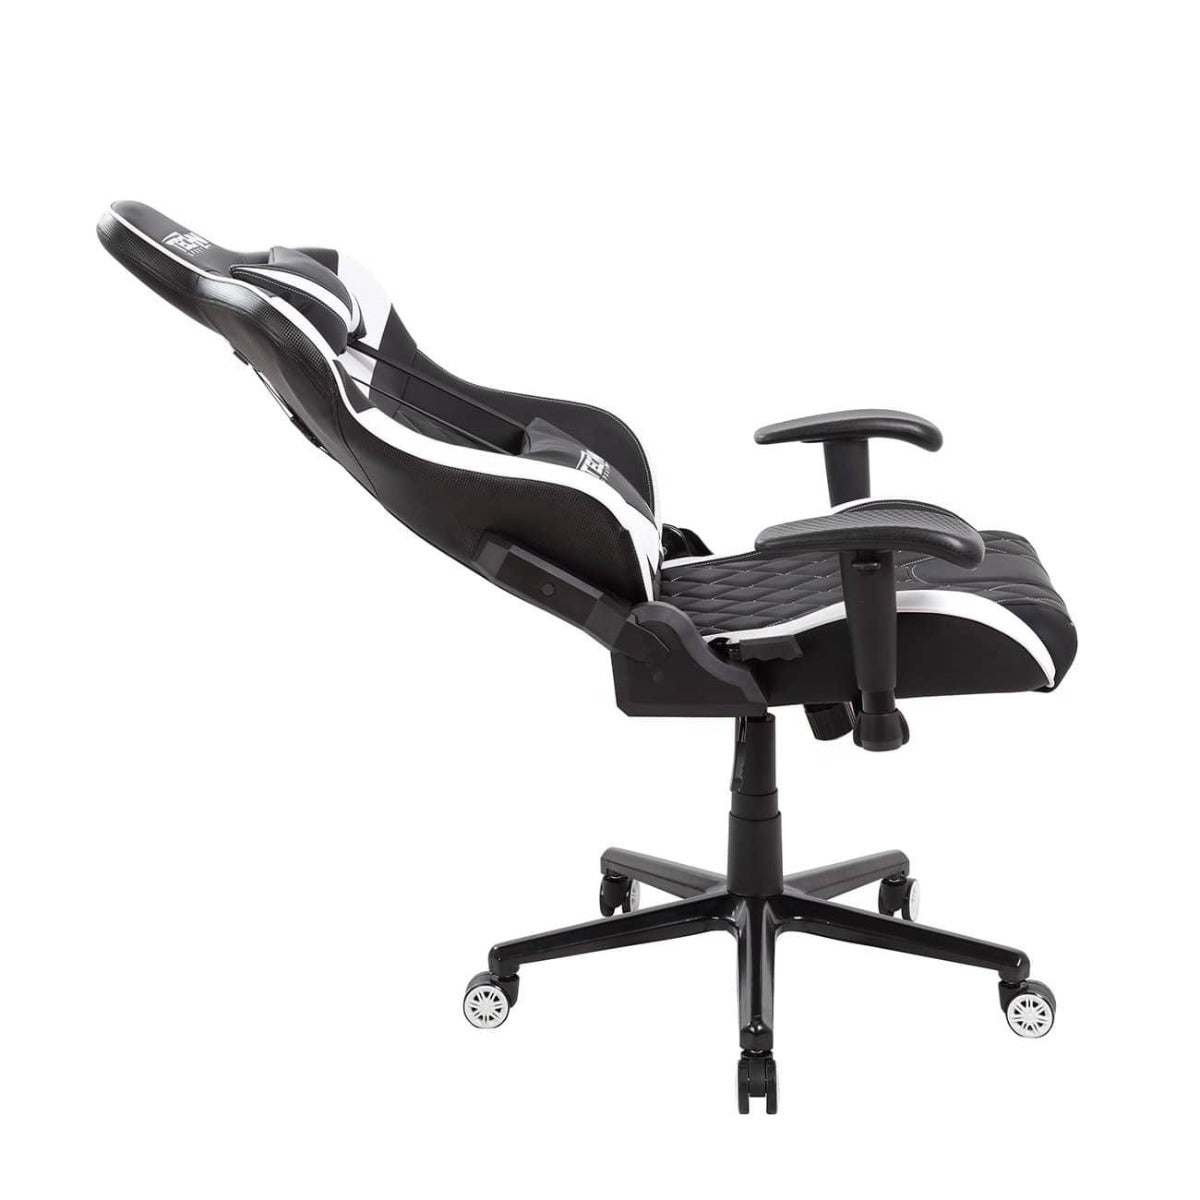 Techni Sport TS-XL1 White Ergonomic High Back Racer Style PC Gaming Chair RTA-TSXL1-WHT Reclined